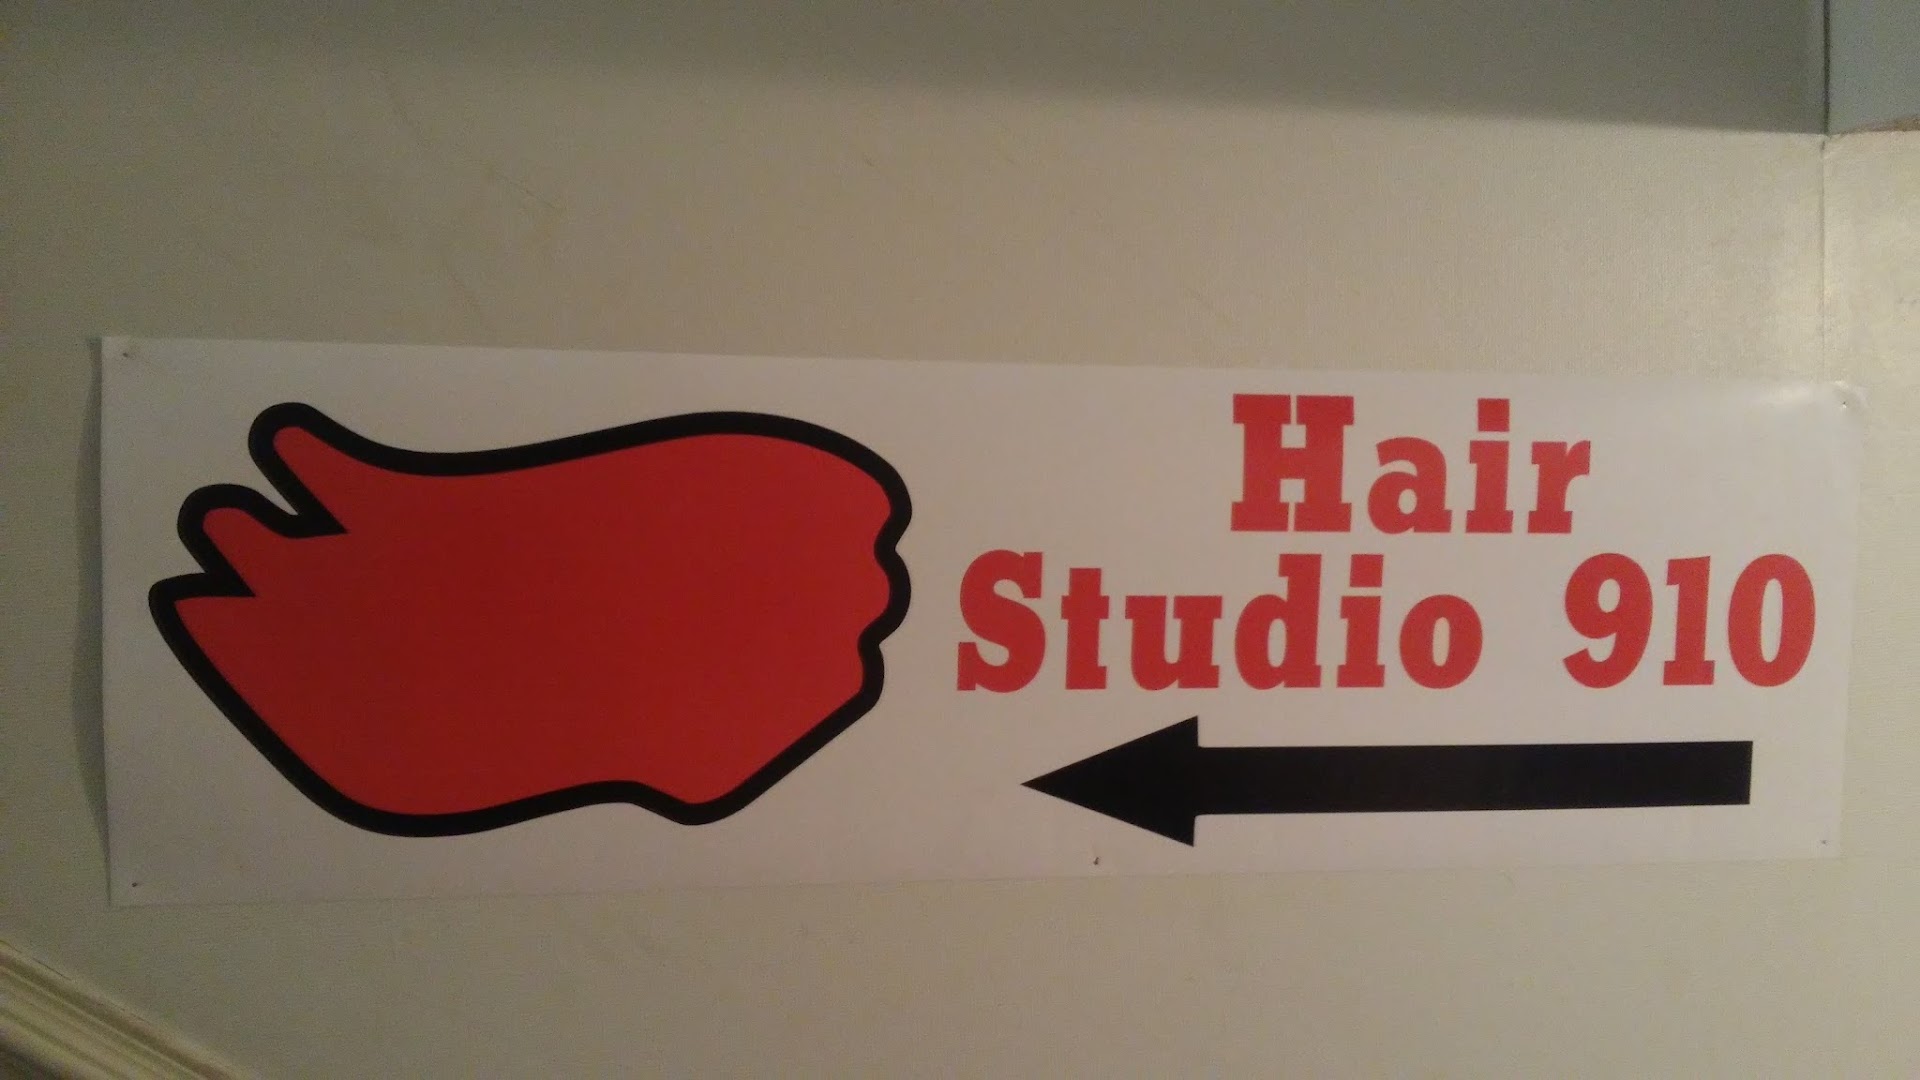 Ms. Keisha's Hair Studio 910